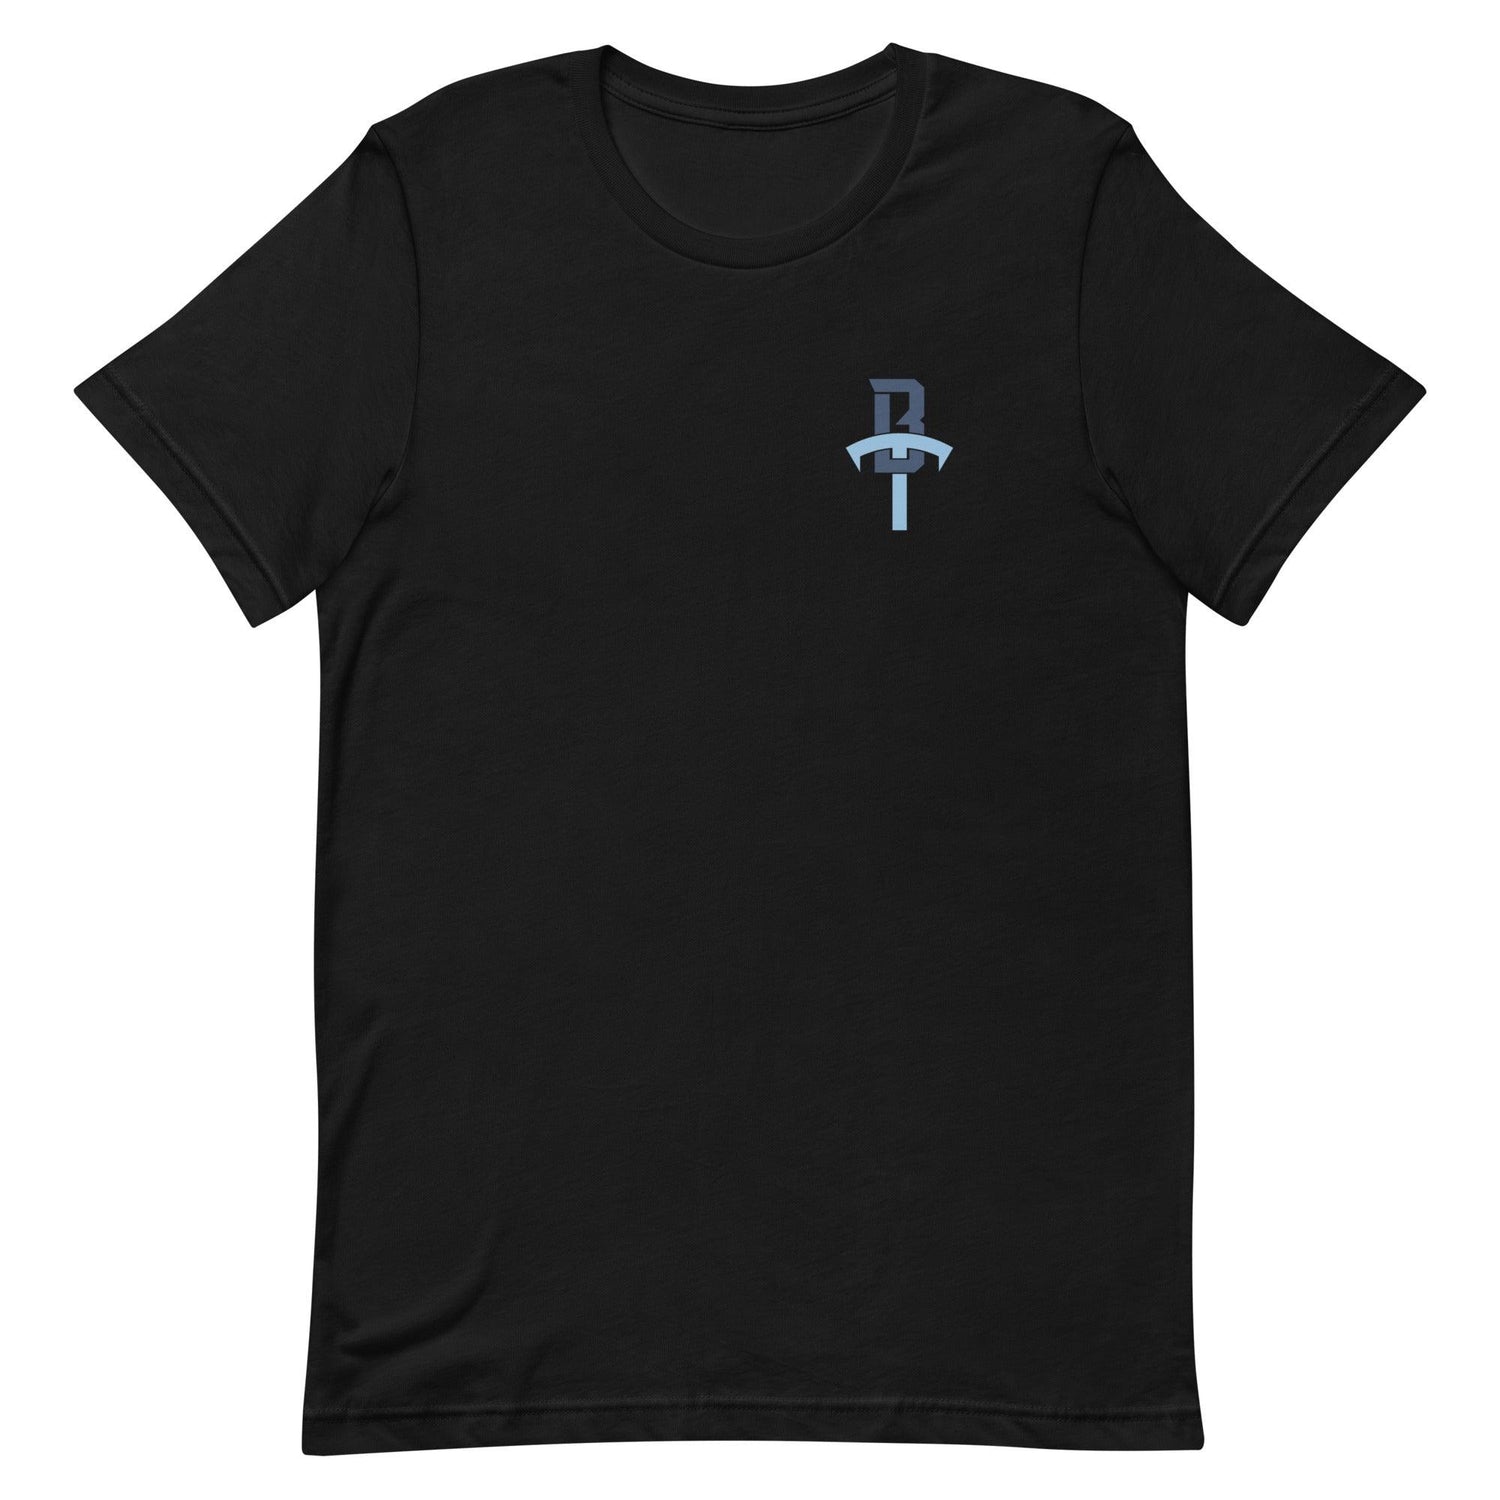 Tyler Baum "Elite" t-shirt - Fan Arch